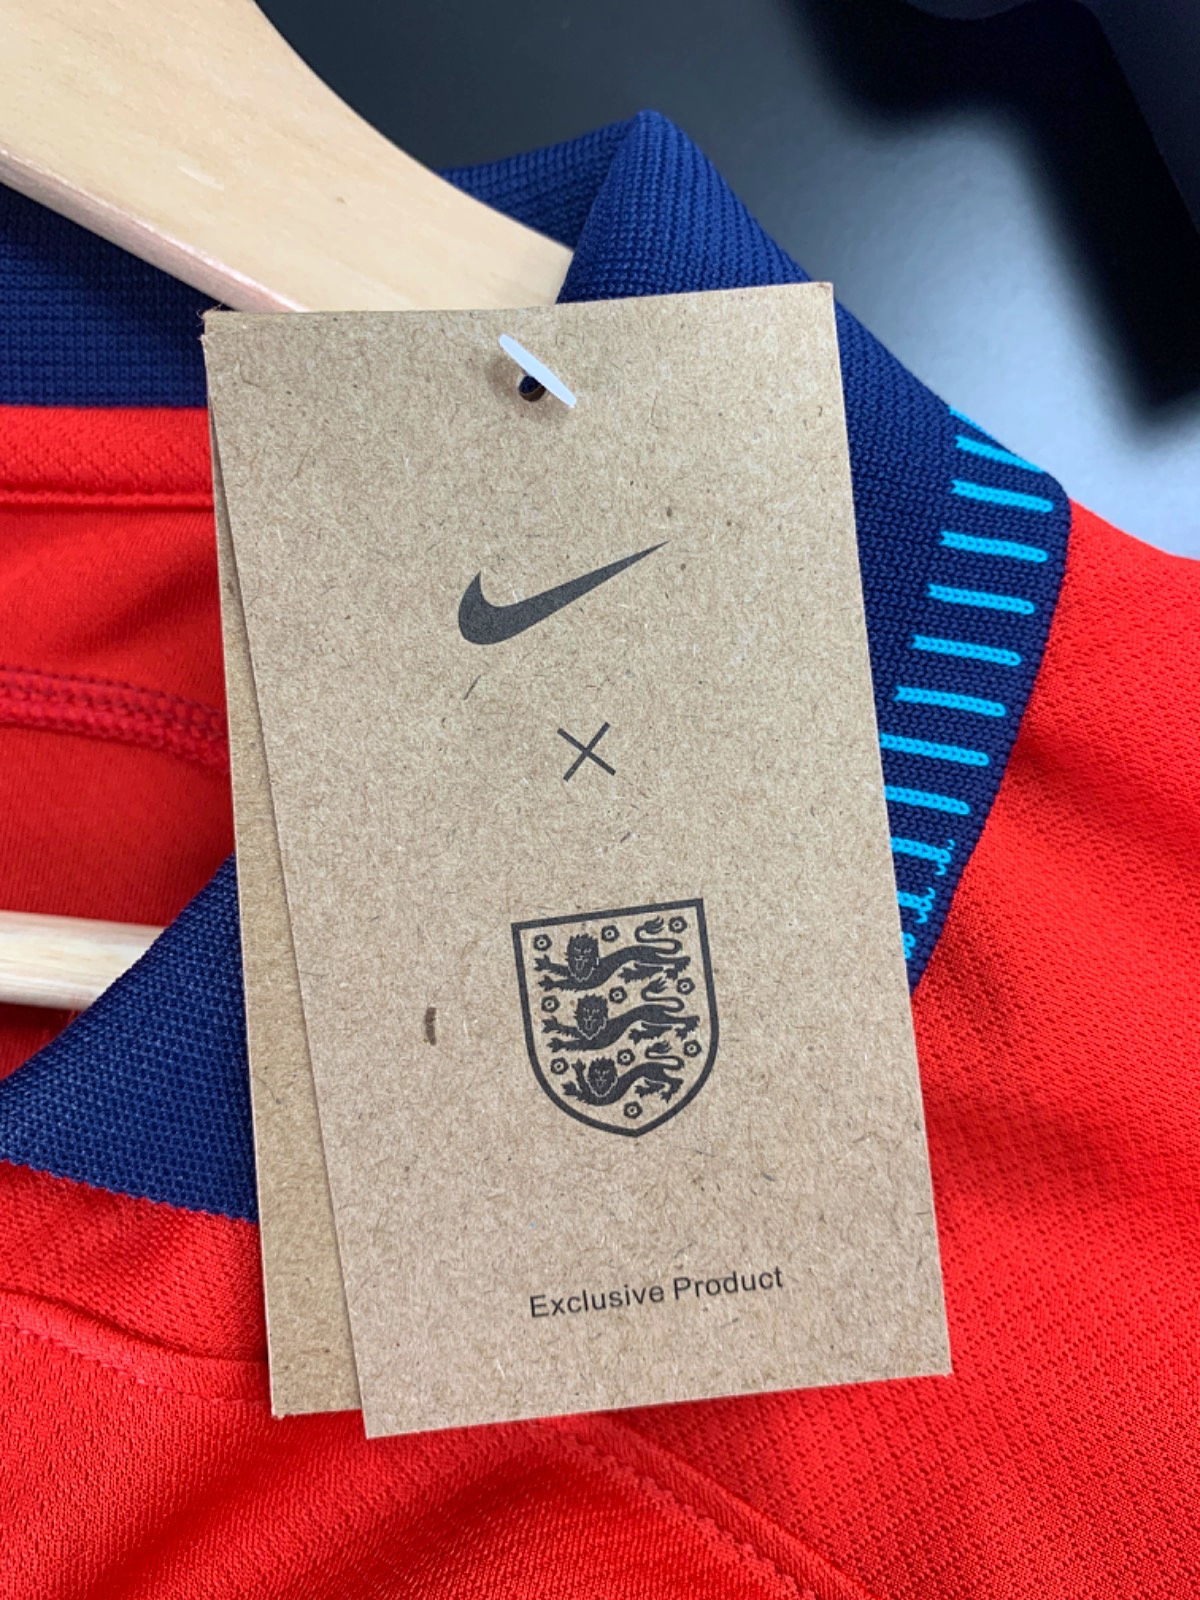 Nike Red England Harry Kane Football Shirt XL